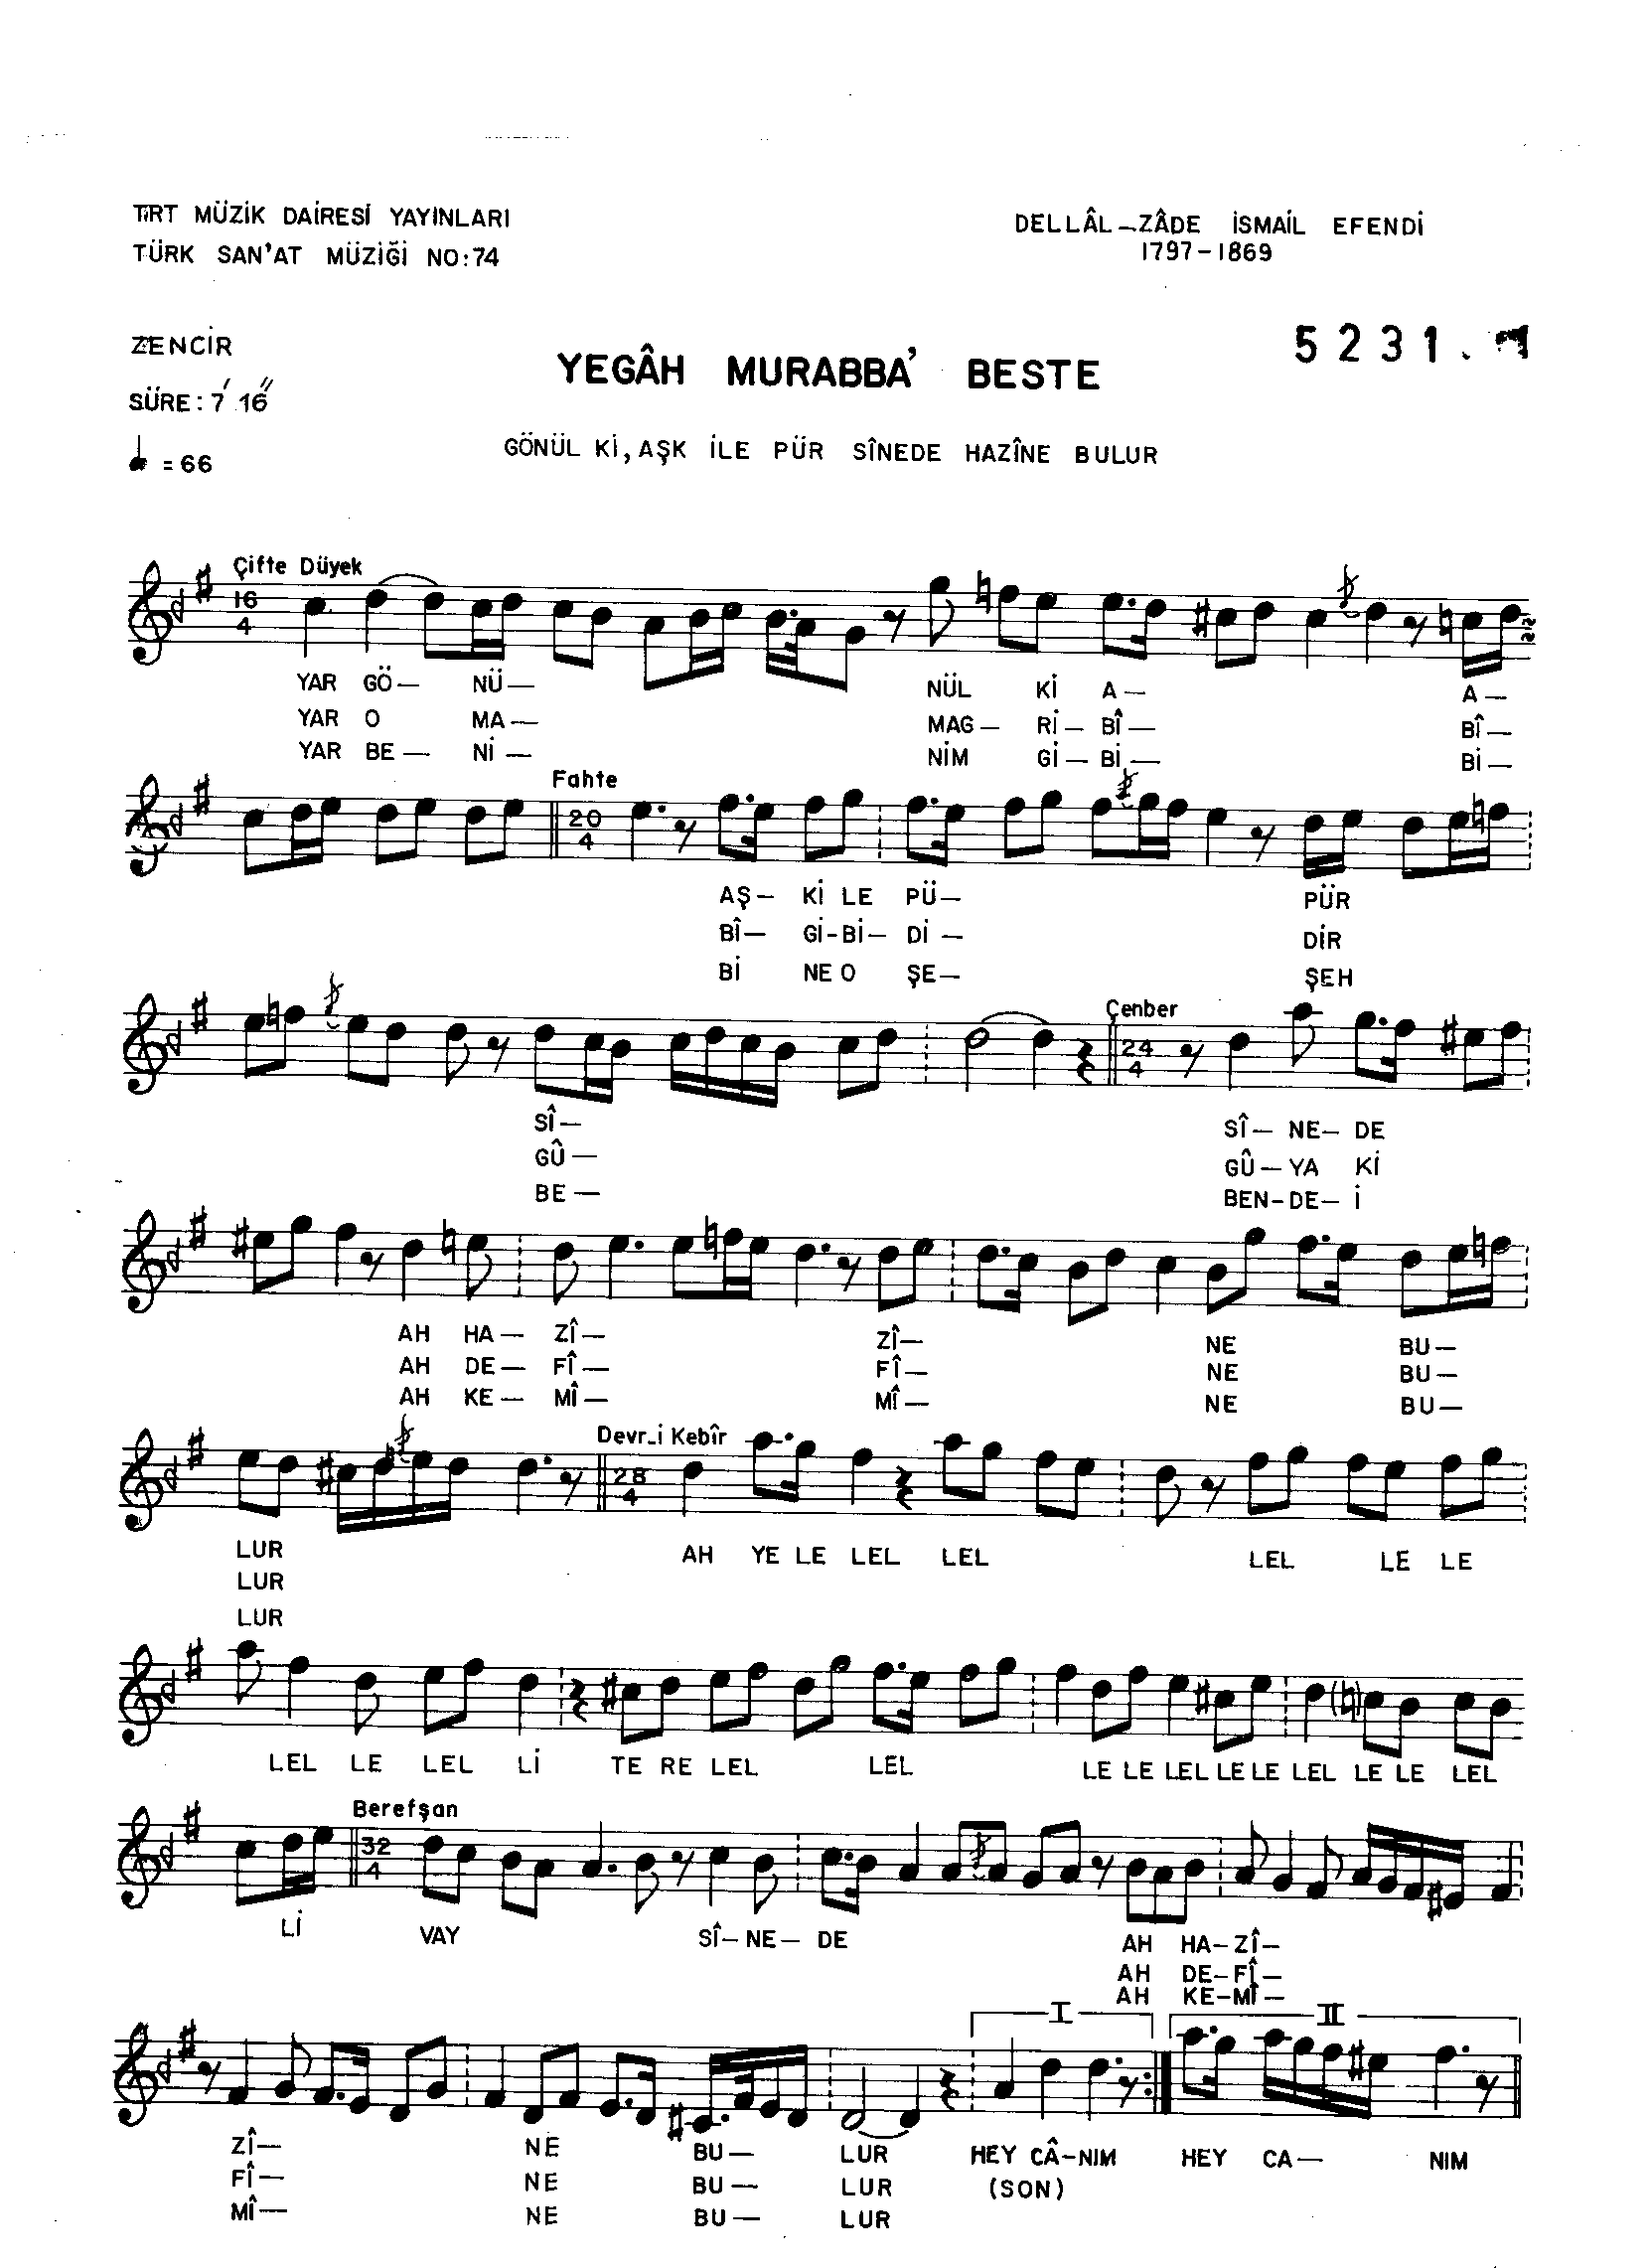 Yegah - Beste - Dellalzâde  - Sayfa 1